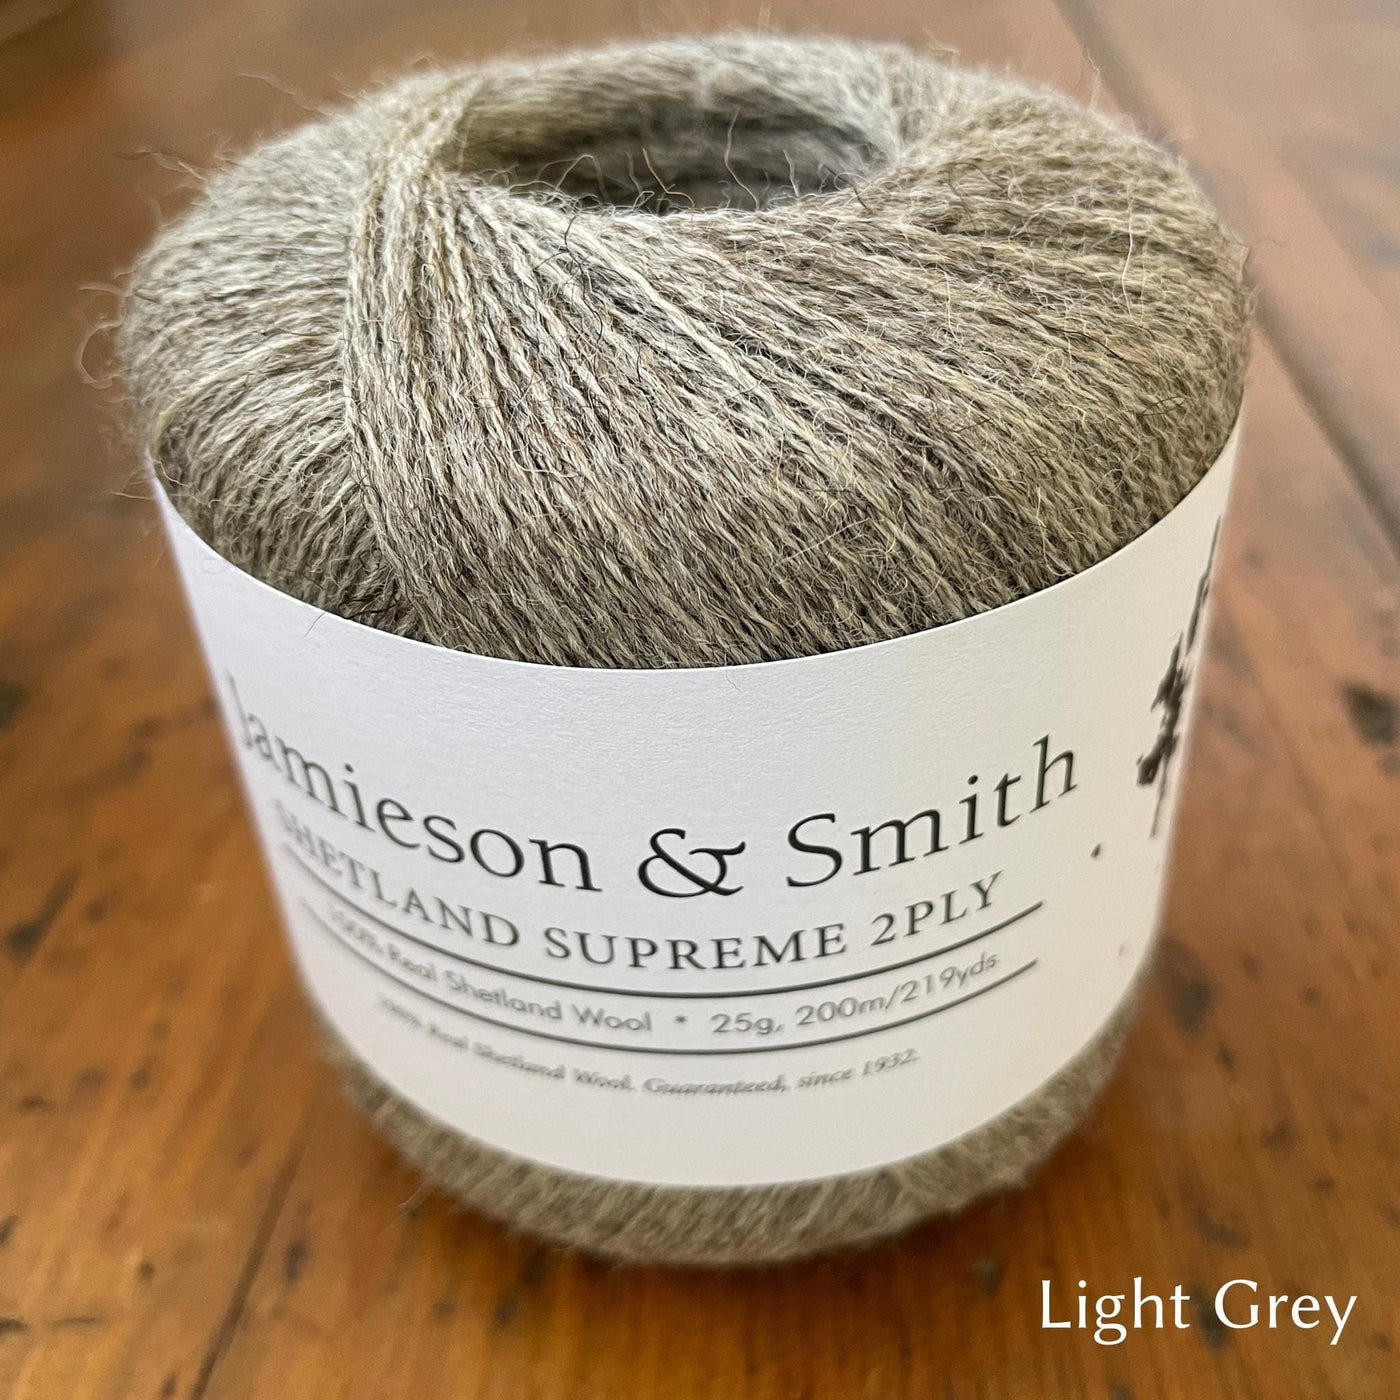 Jamieson & Smith 2ply Shetland Supreme Lace Weight yarn